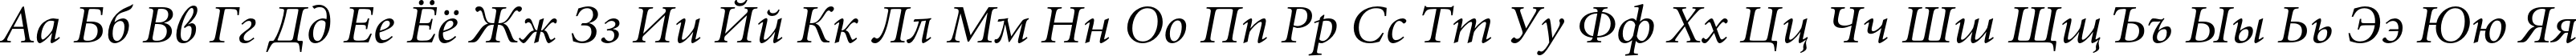 Пример написания русского алфавита шрифтом Miniature Italic